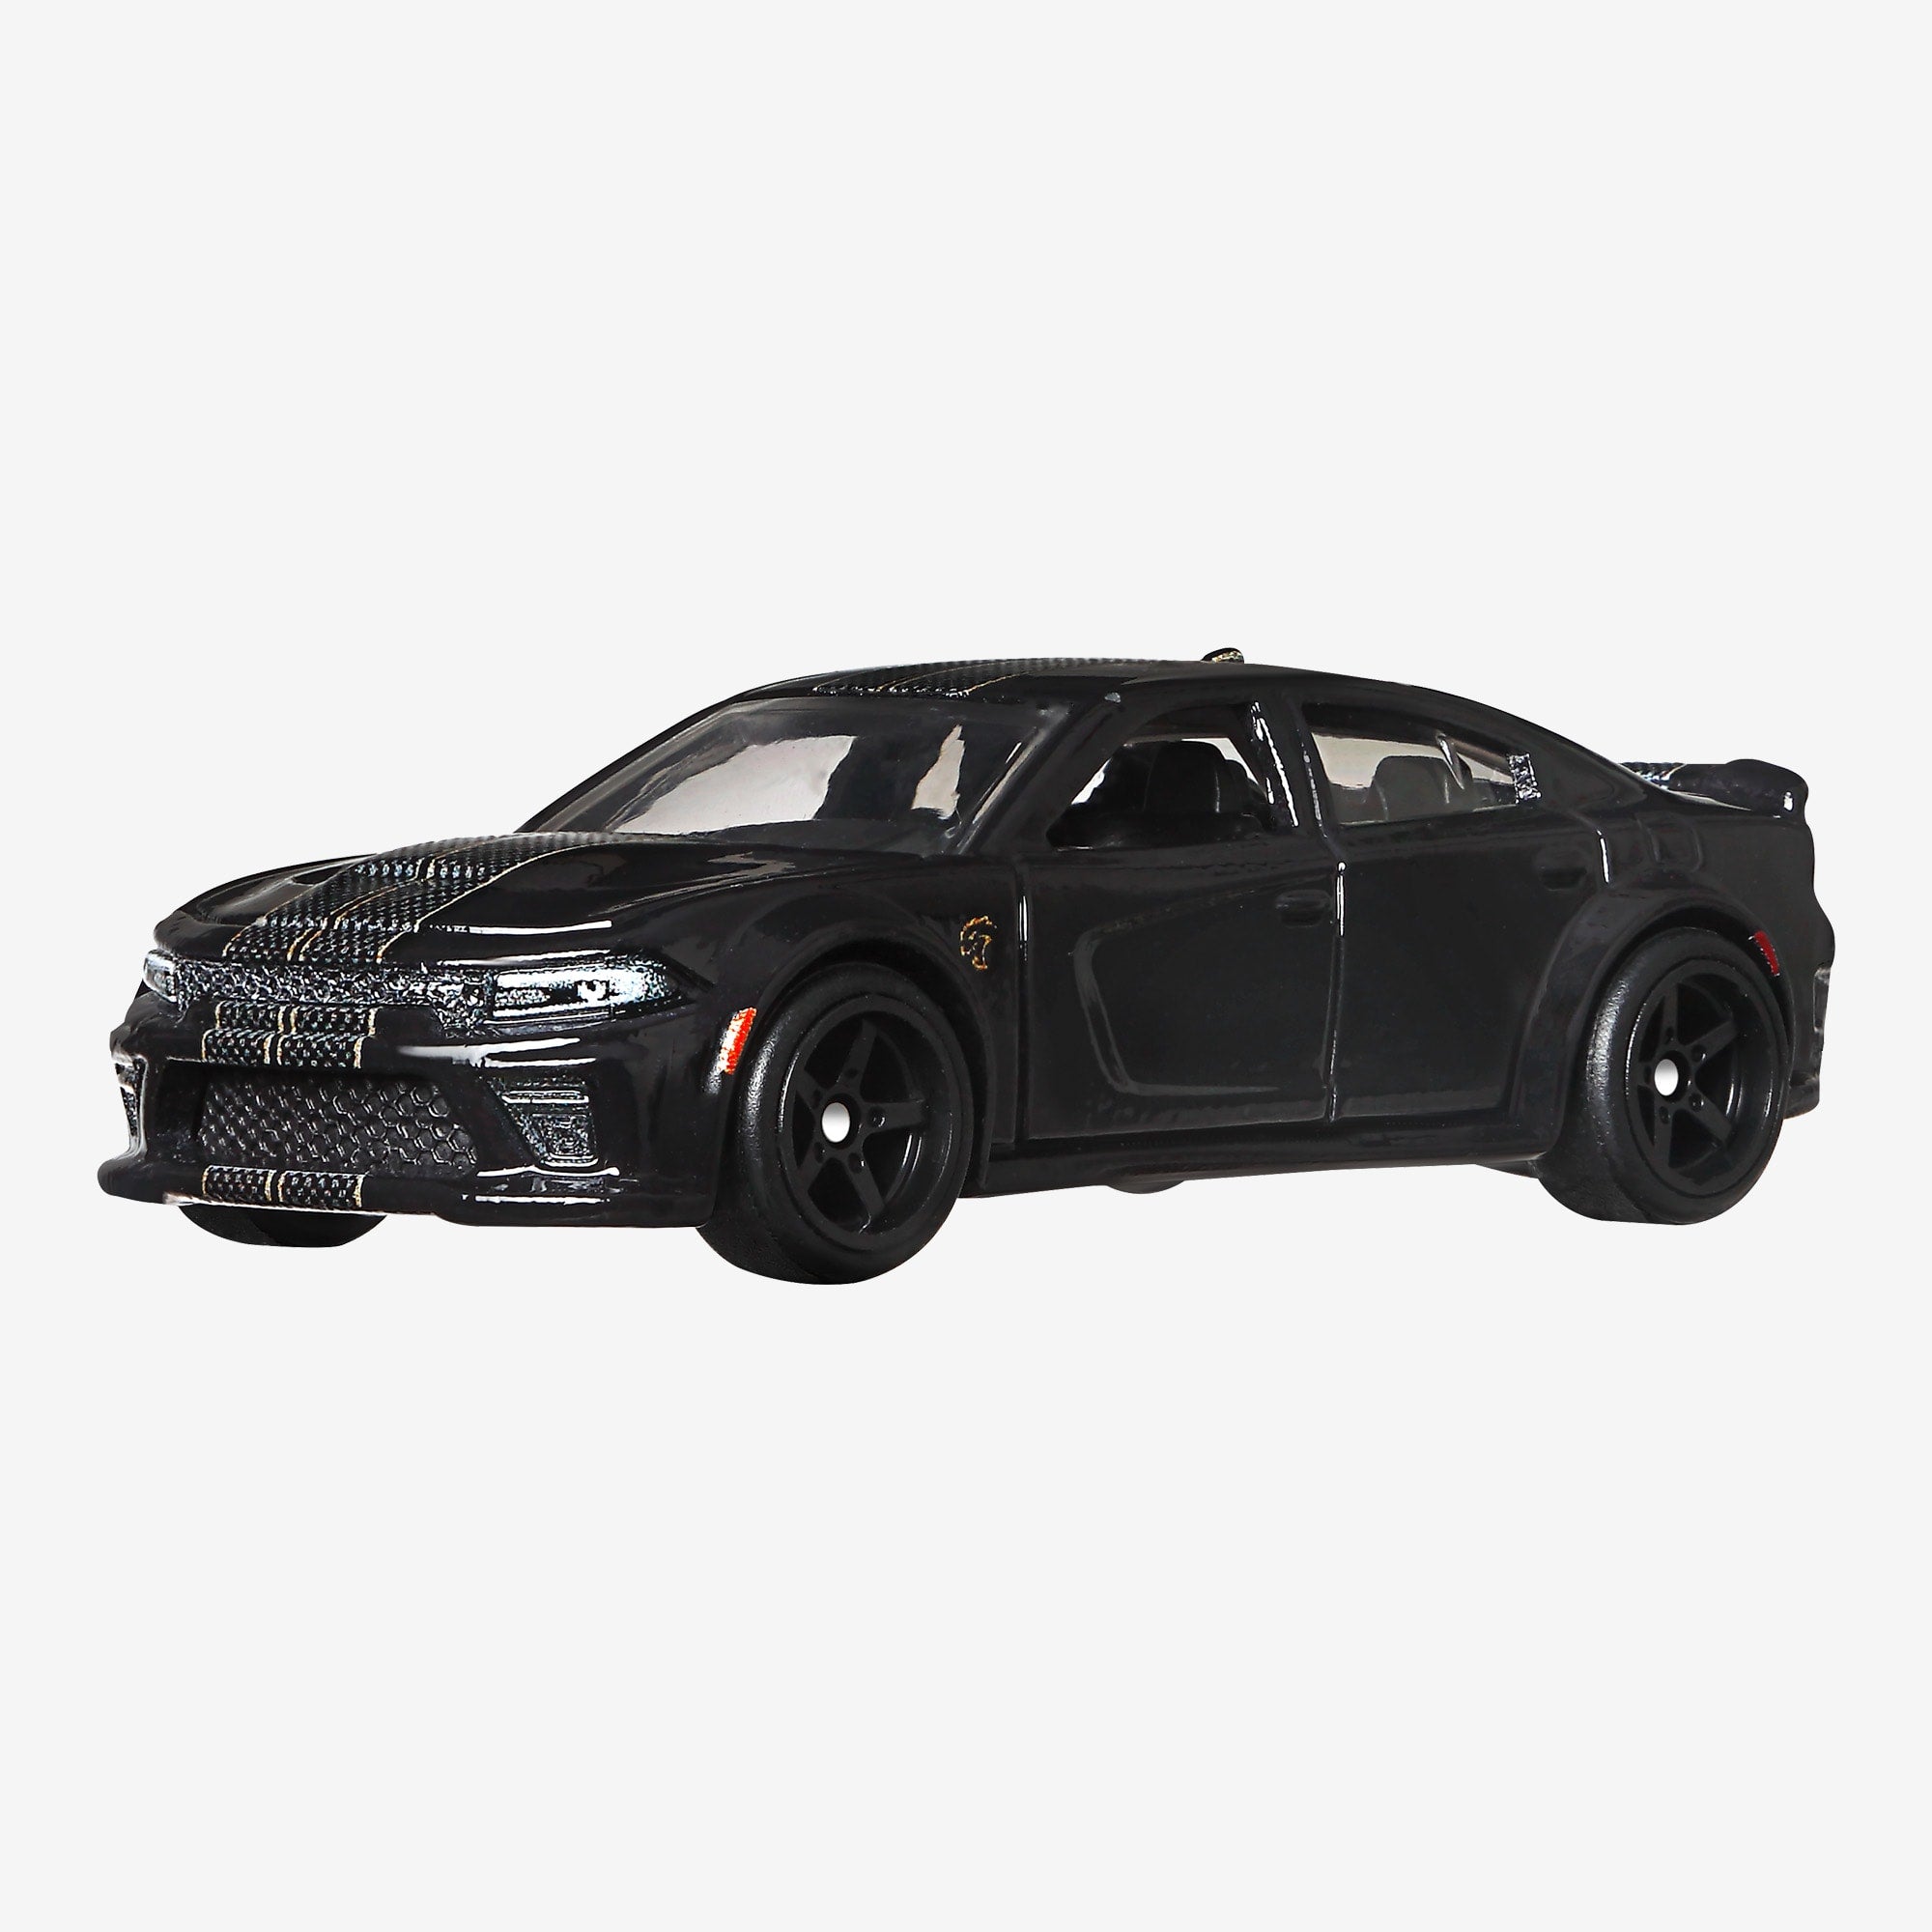 Hot Wheels Fast & Furious Premium Series, Dodge Charger Hellcat